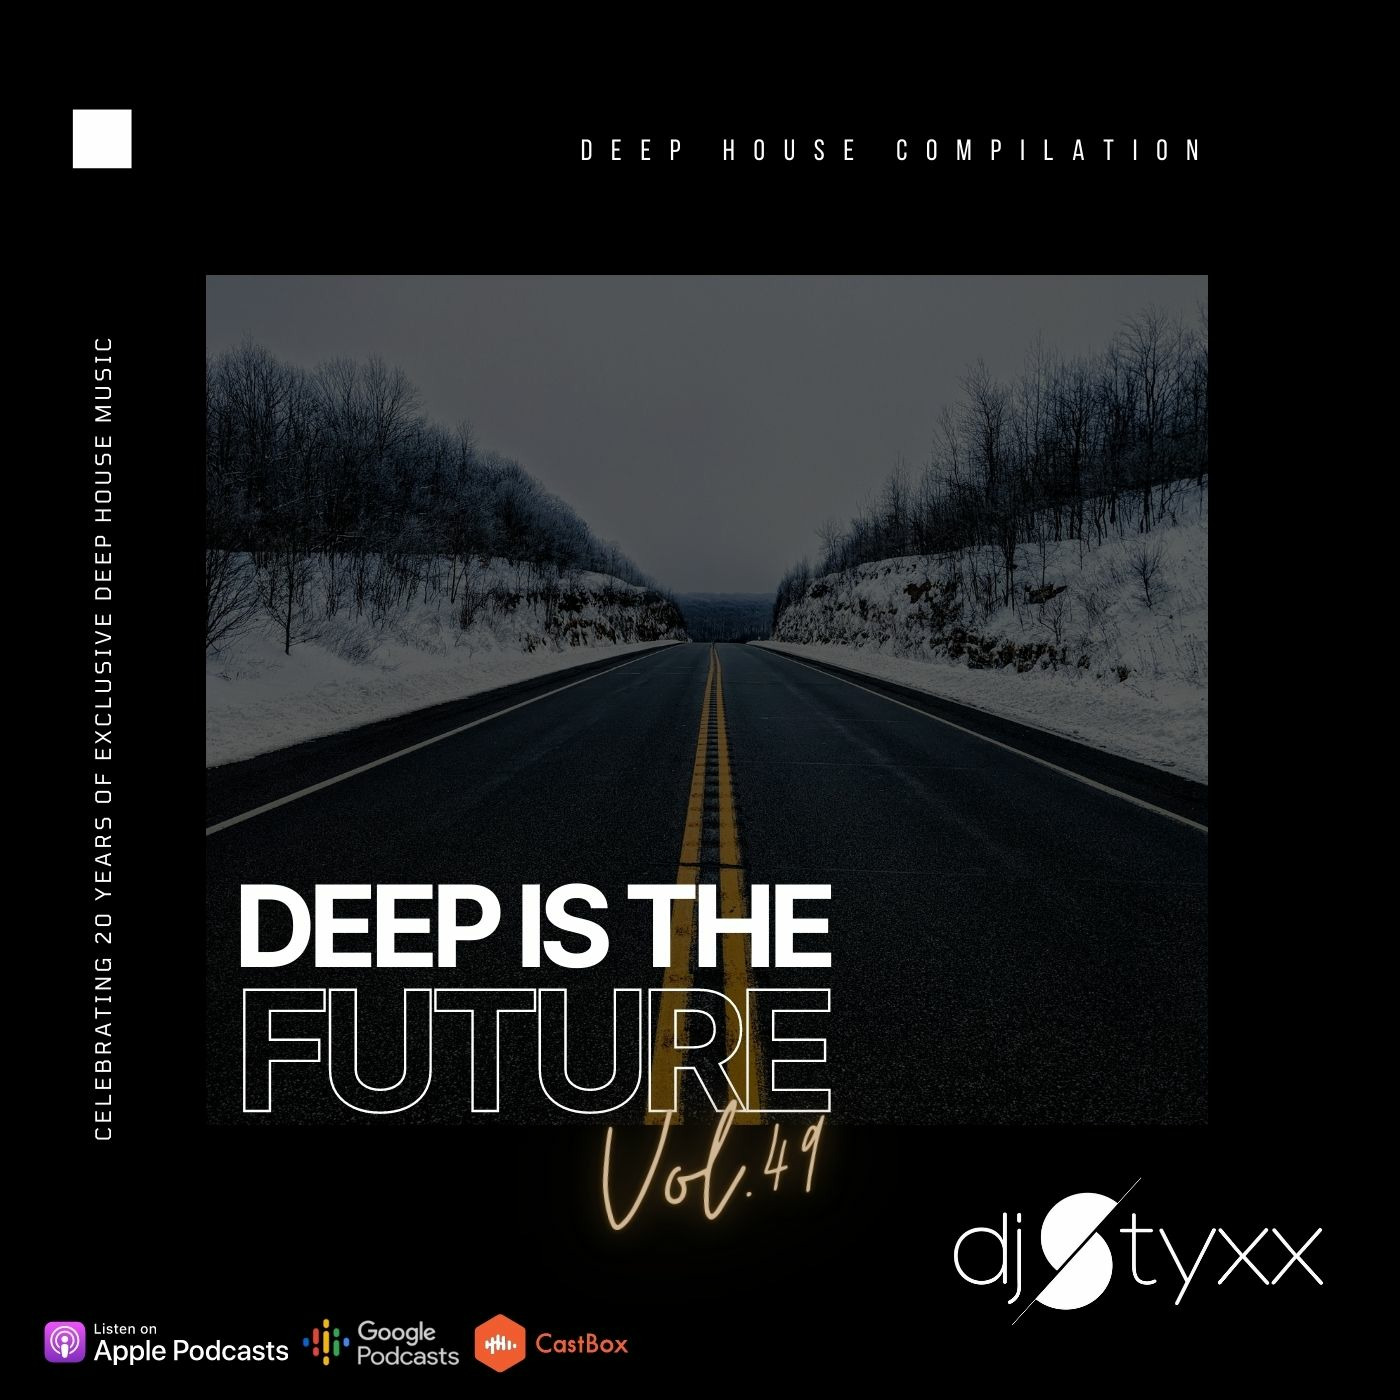 Styxx - Deep is the Future (Vol.49)